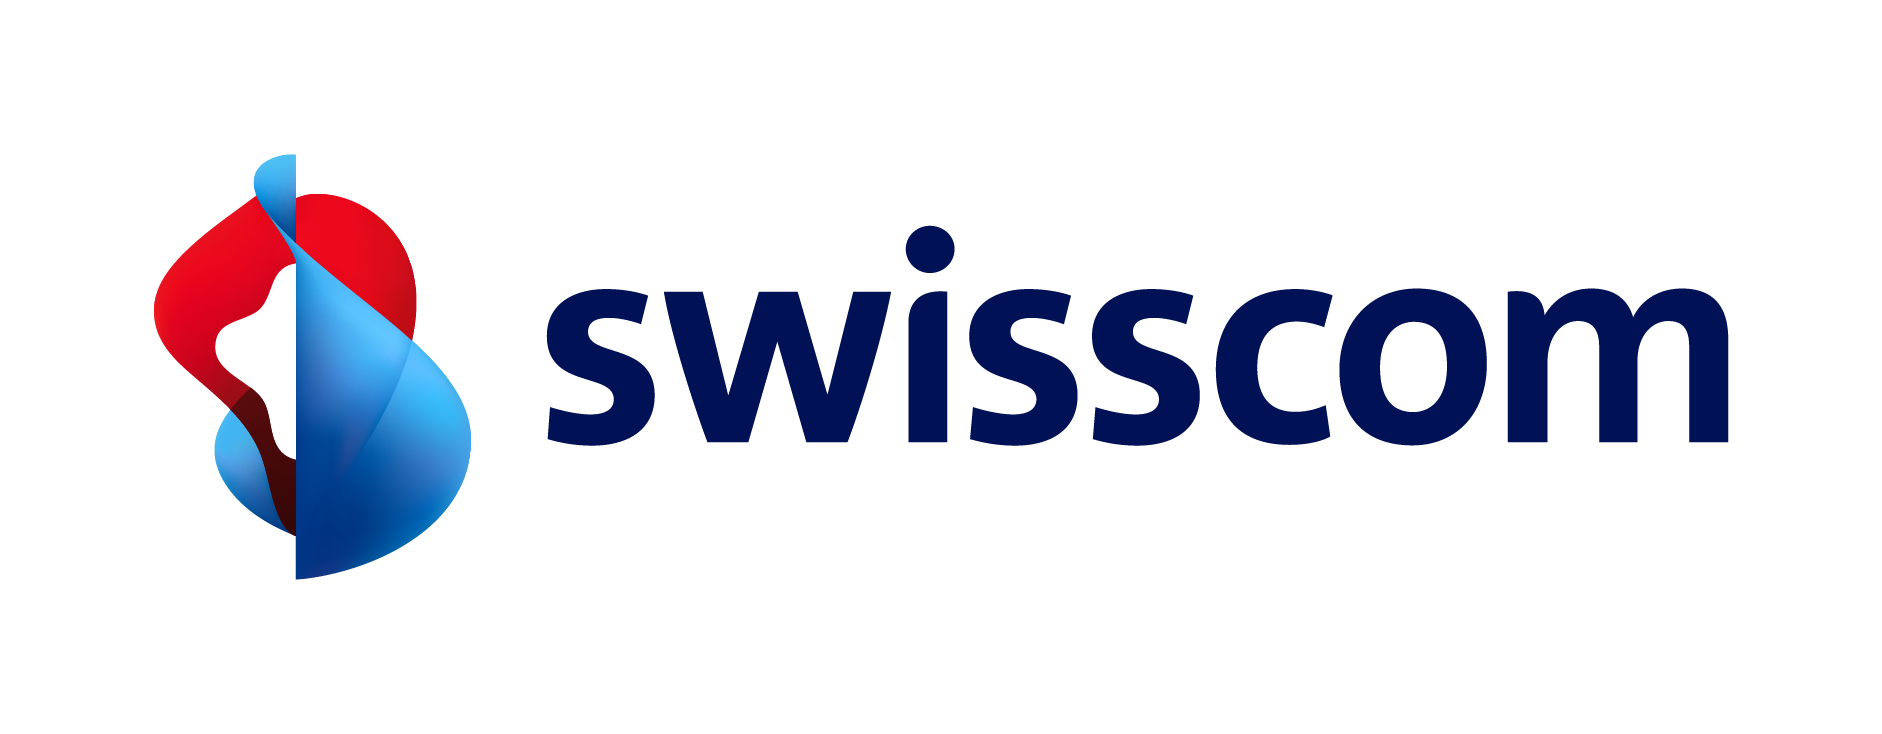 Swisscom_logo - Logo